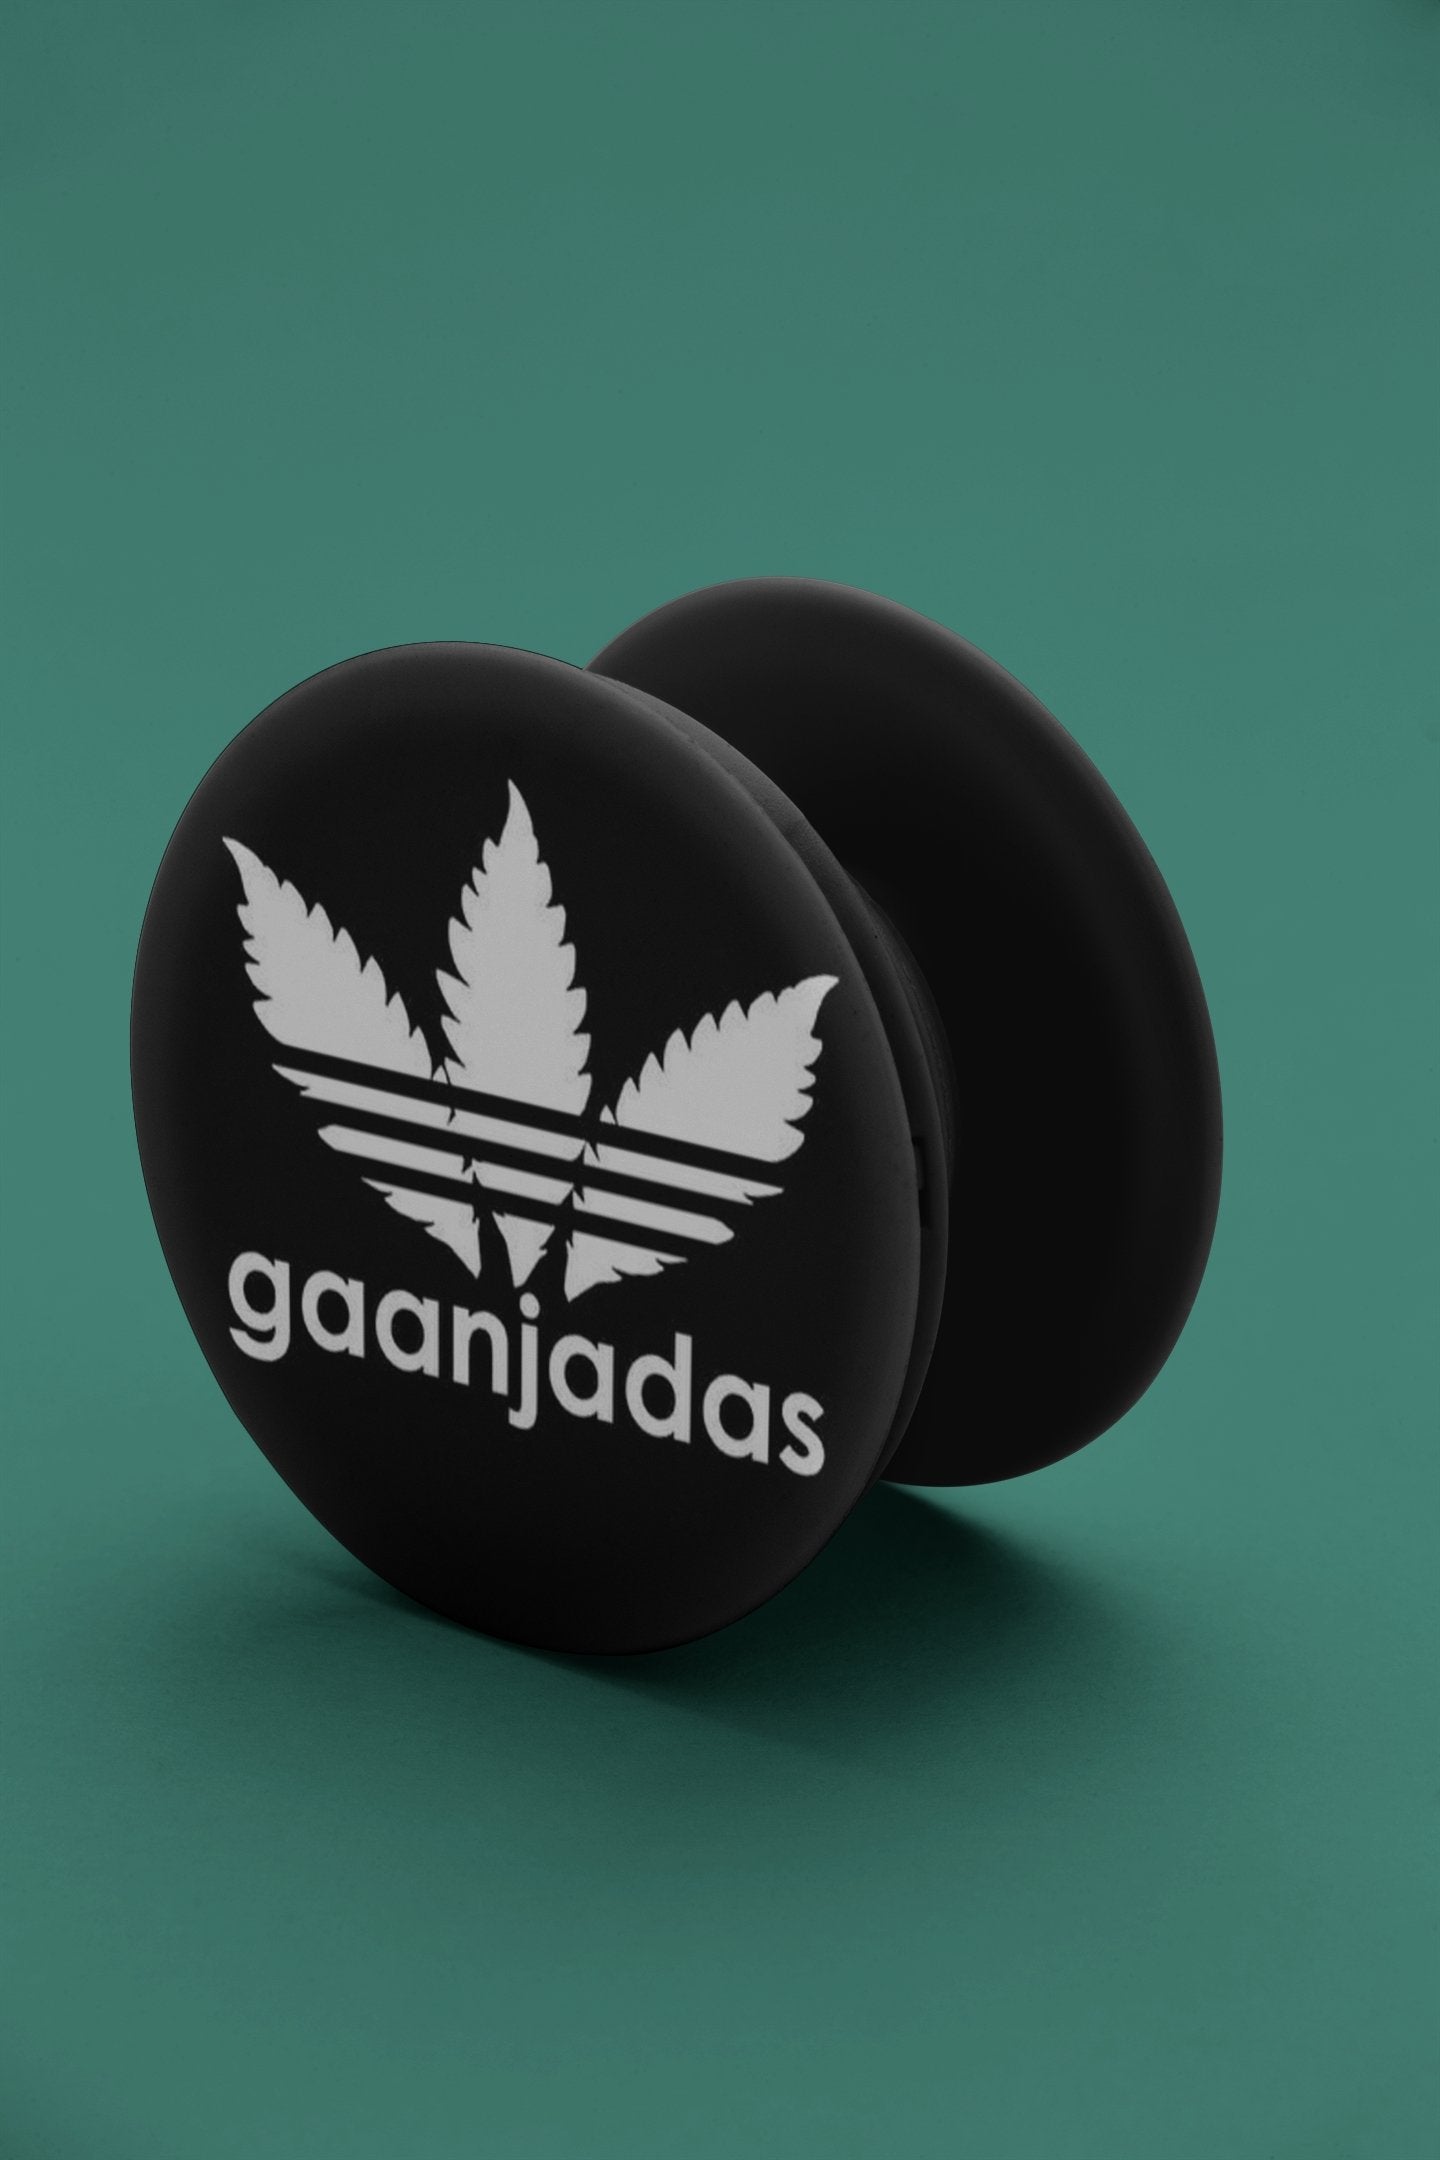 Gaanjadas Pop Grip for the stoned - Insane Tees